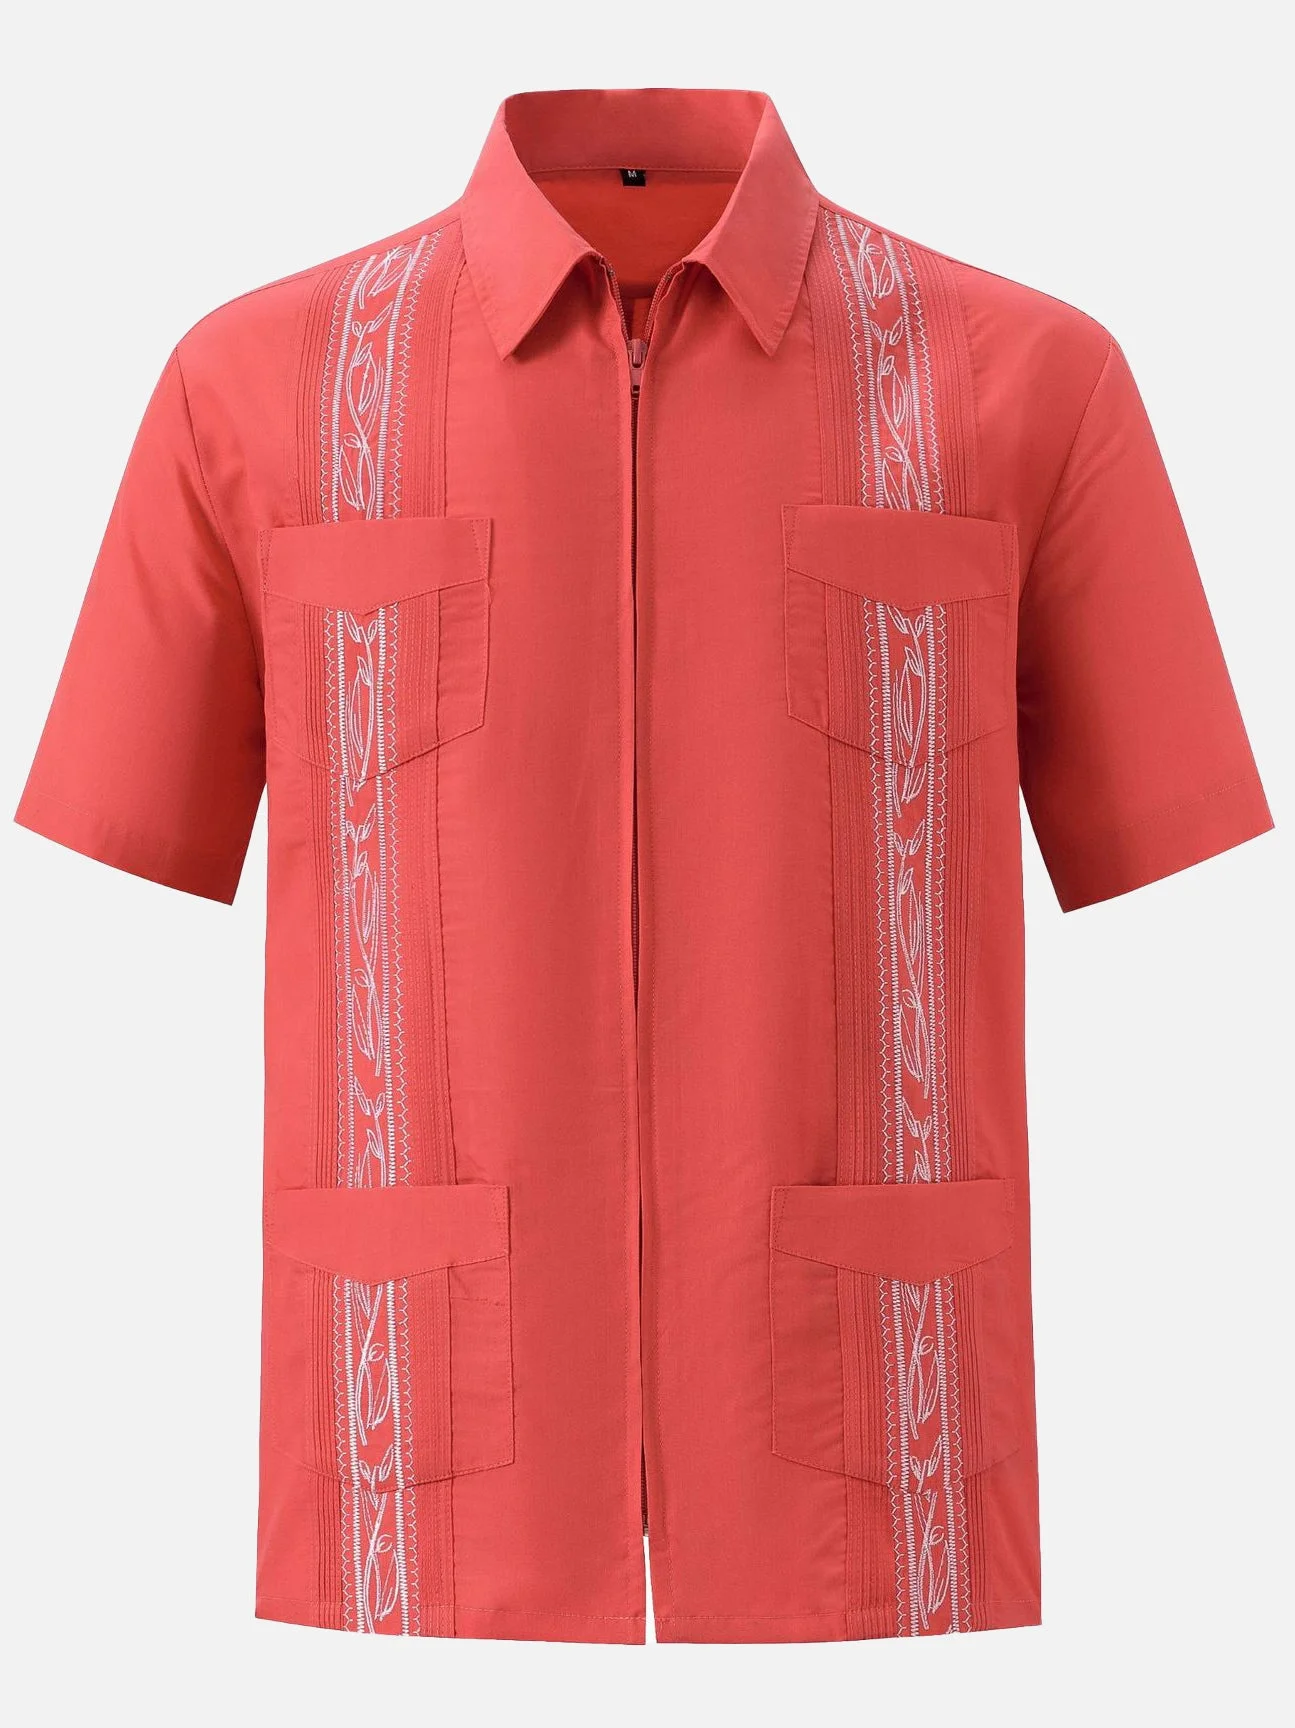 Royaura Beach Holiday Men's Guayabera Shirts Comfortable Blend Oversized Hawaiian Aloha Shirts